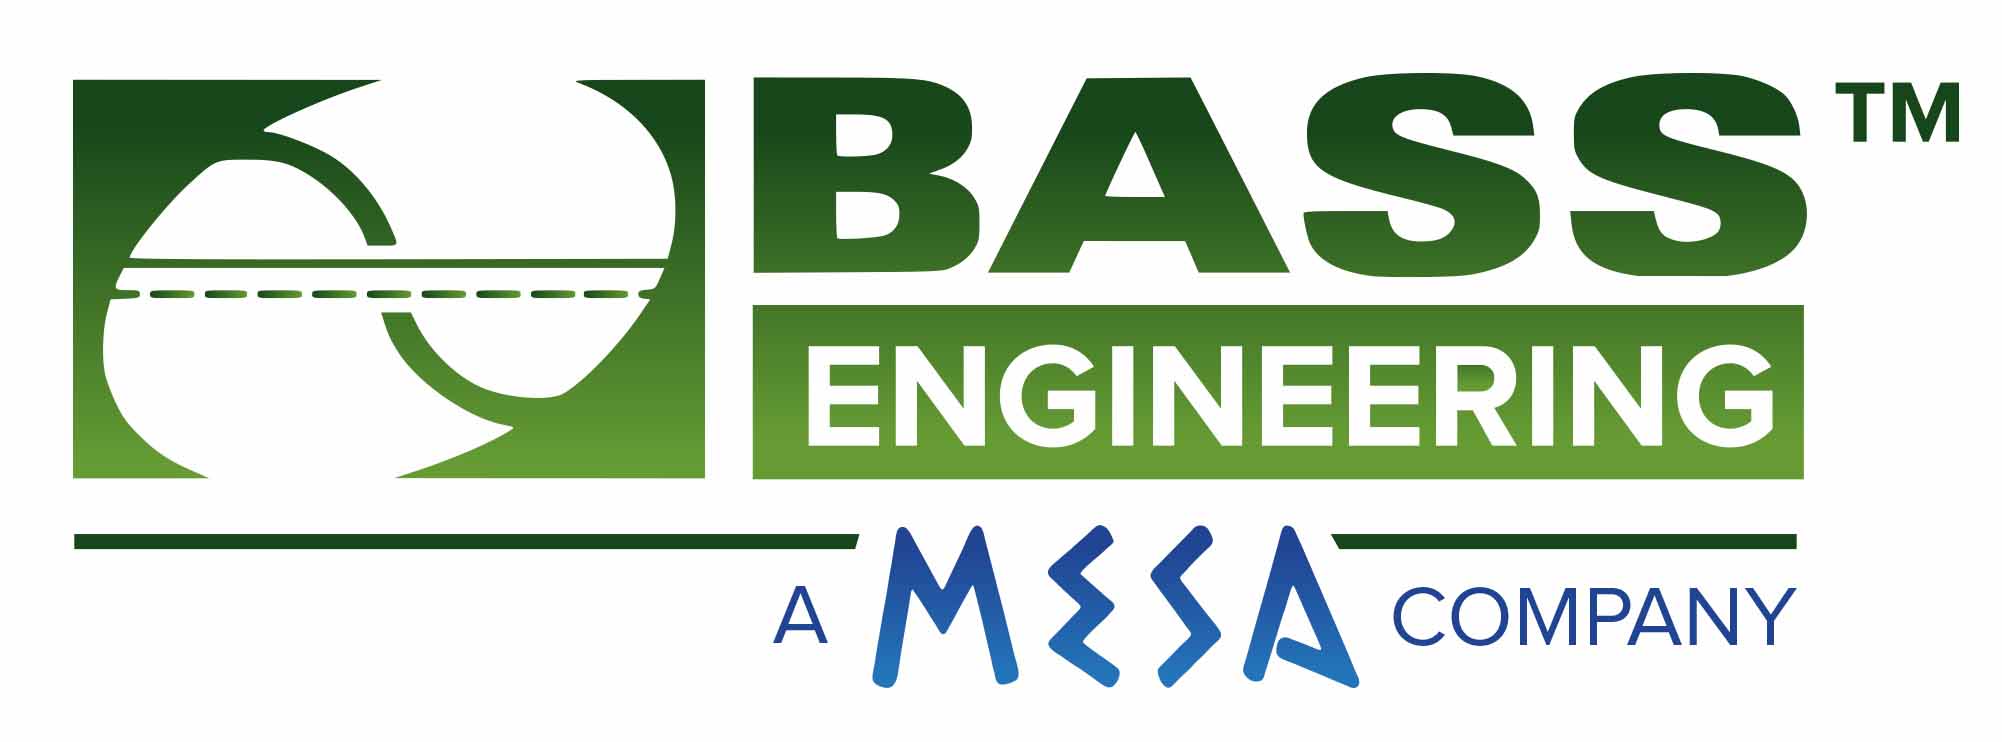 Bass engineering MESA company logo